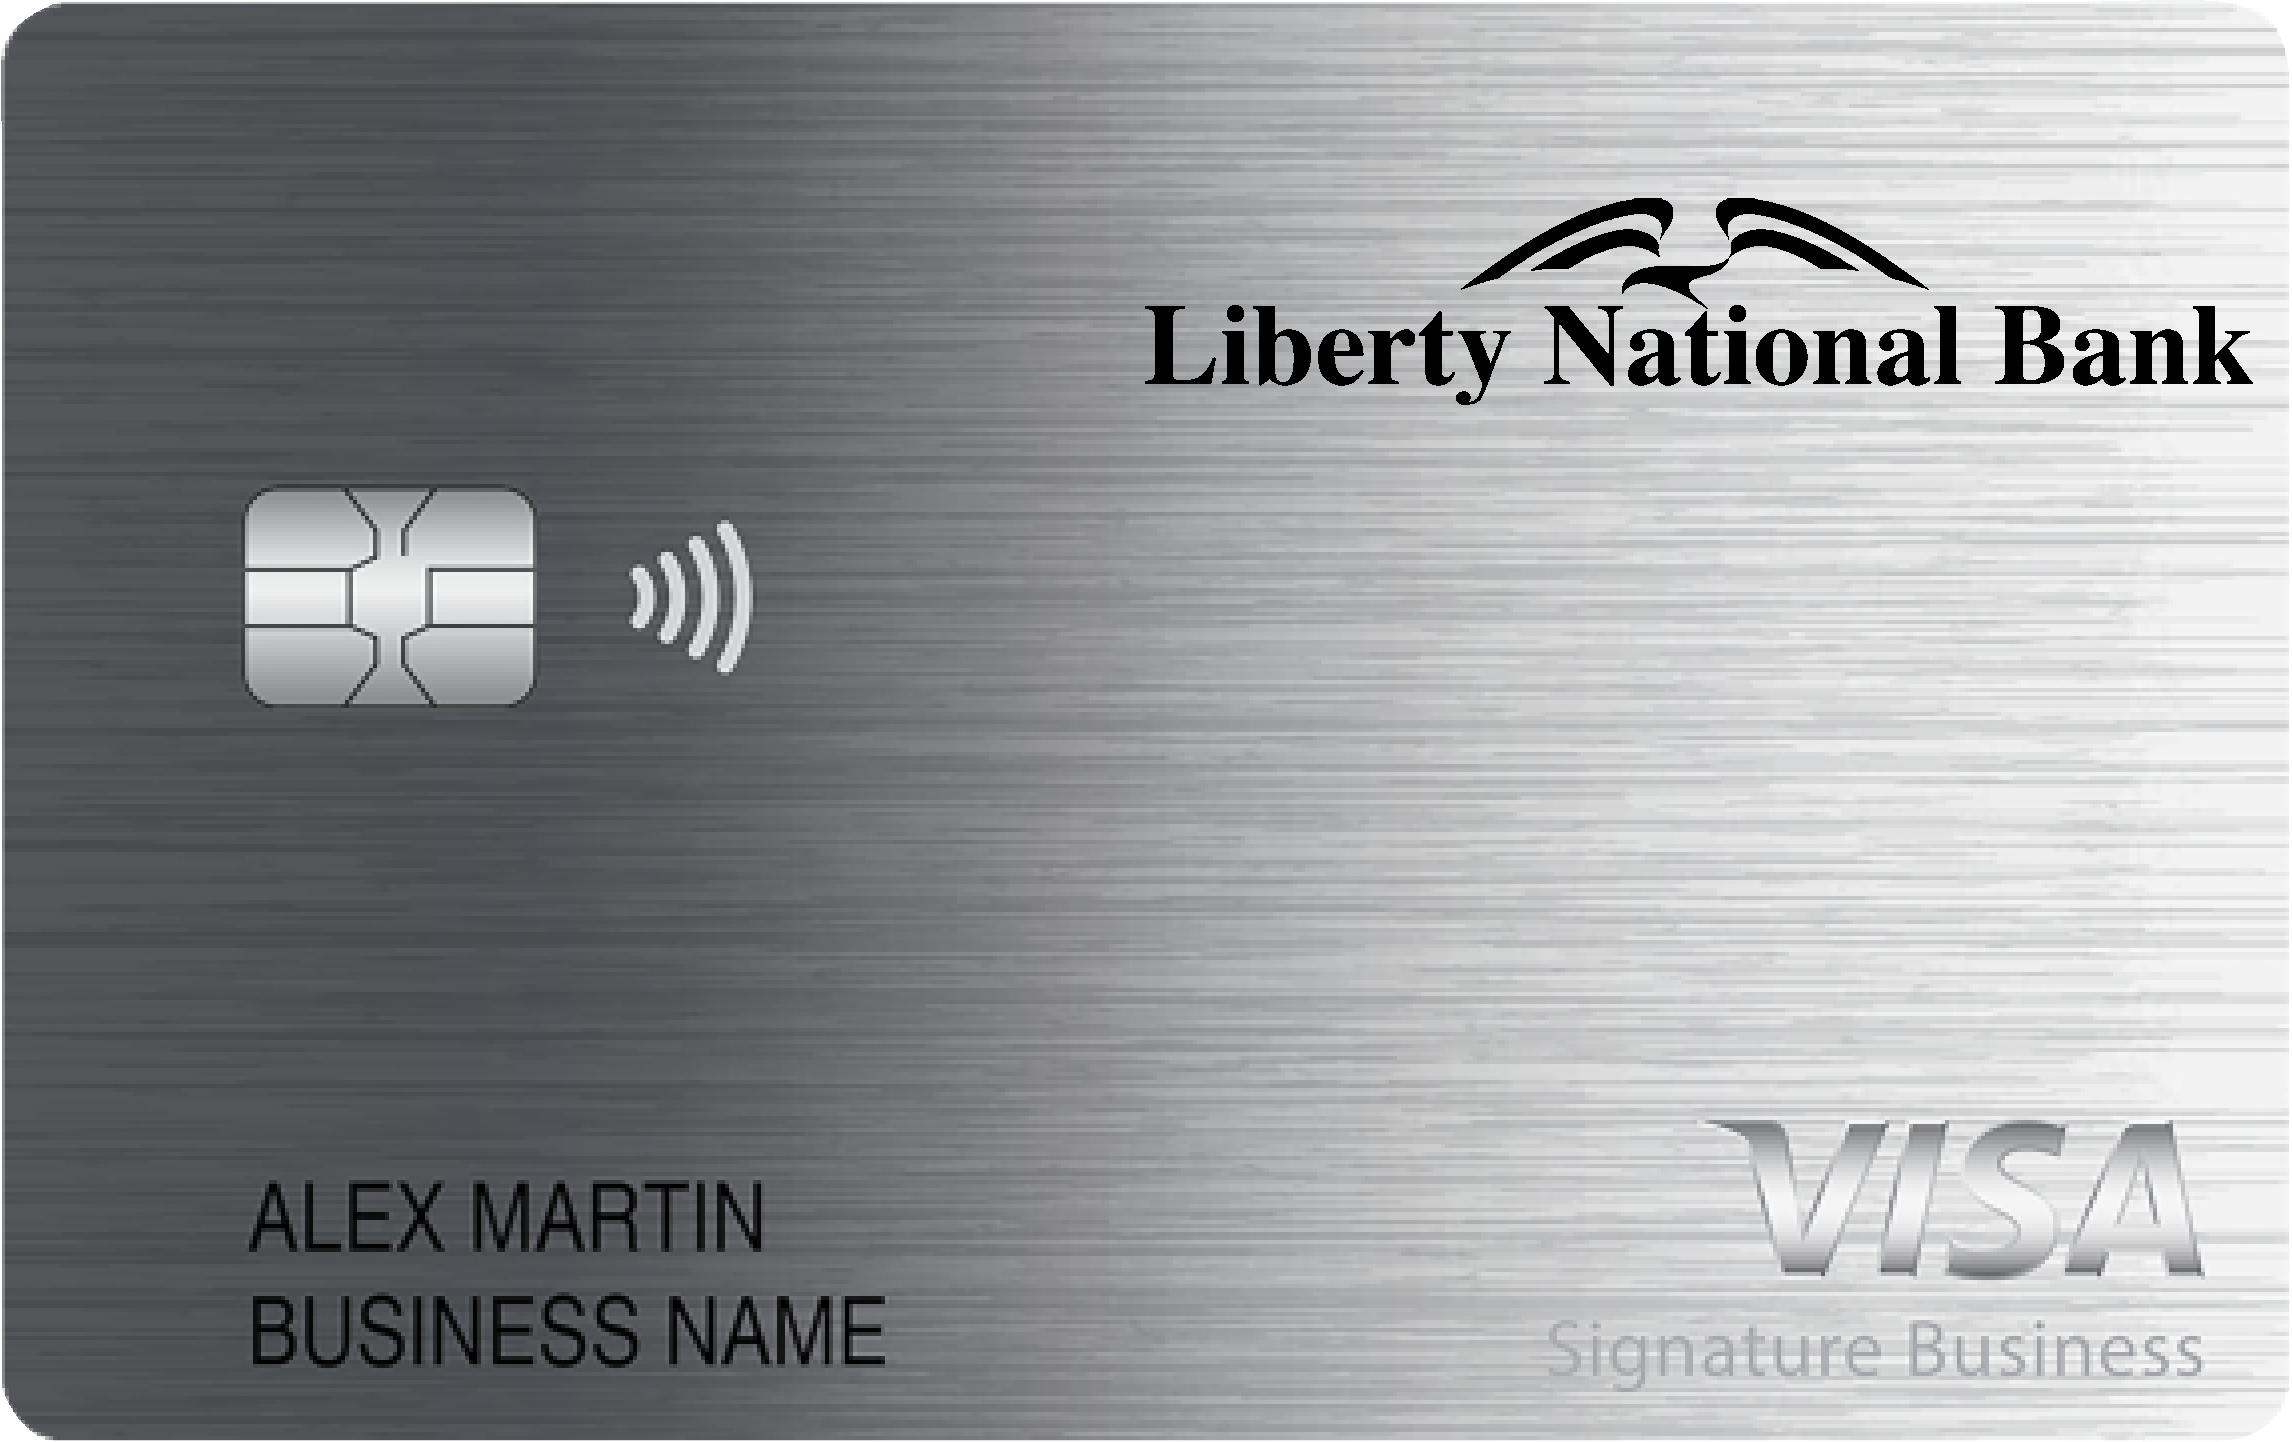 Liberty National Bank Smart Business Rewards Card